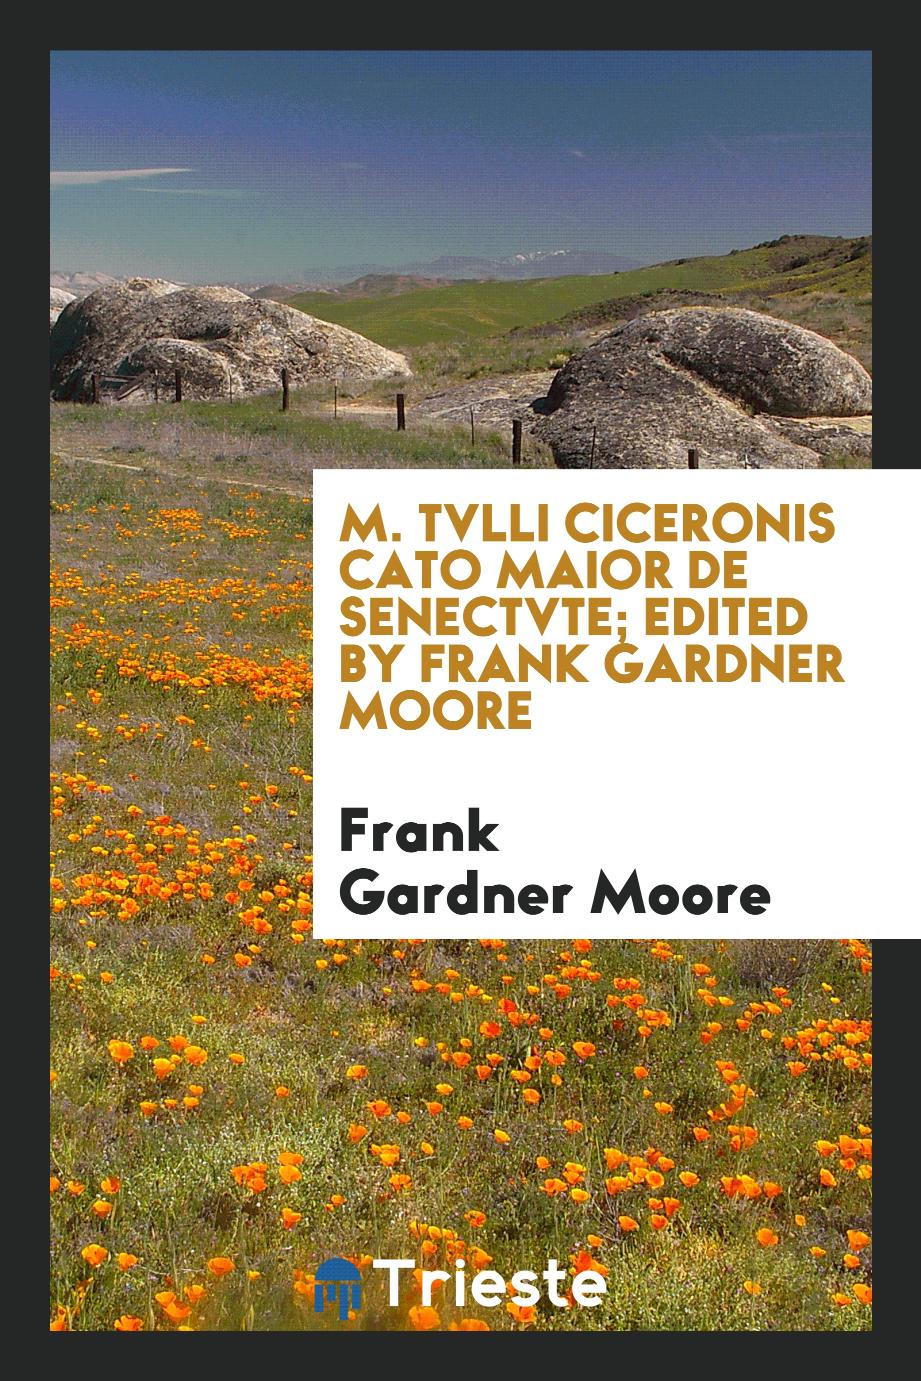 M. Tvlli Ciceronis Cato Maior de senectvte; edited by Frank Gardner Moore